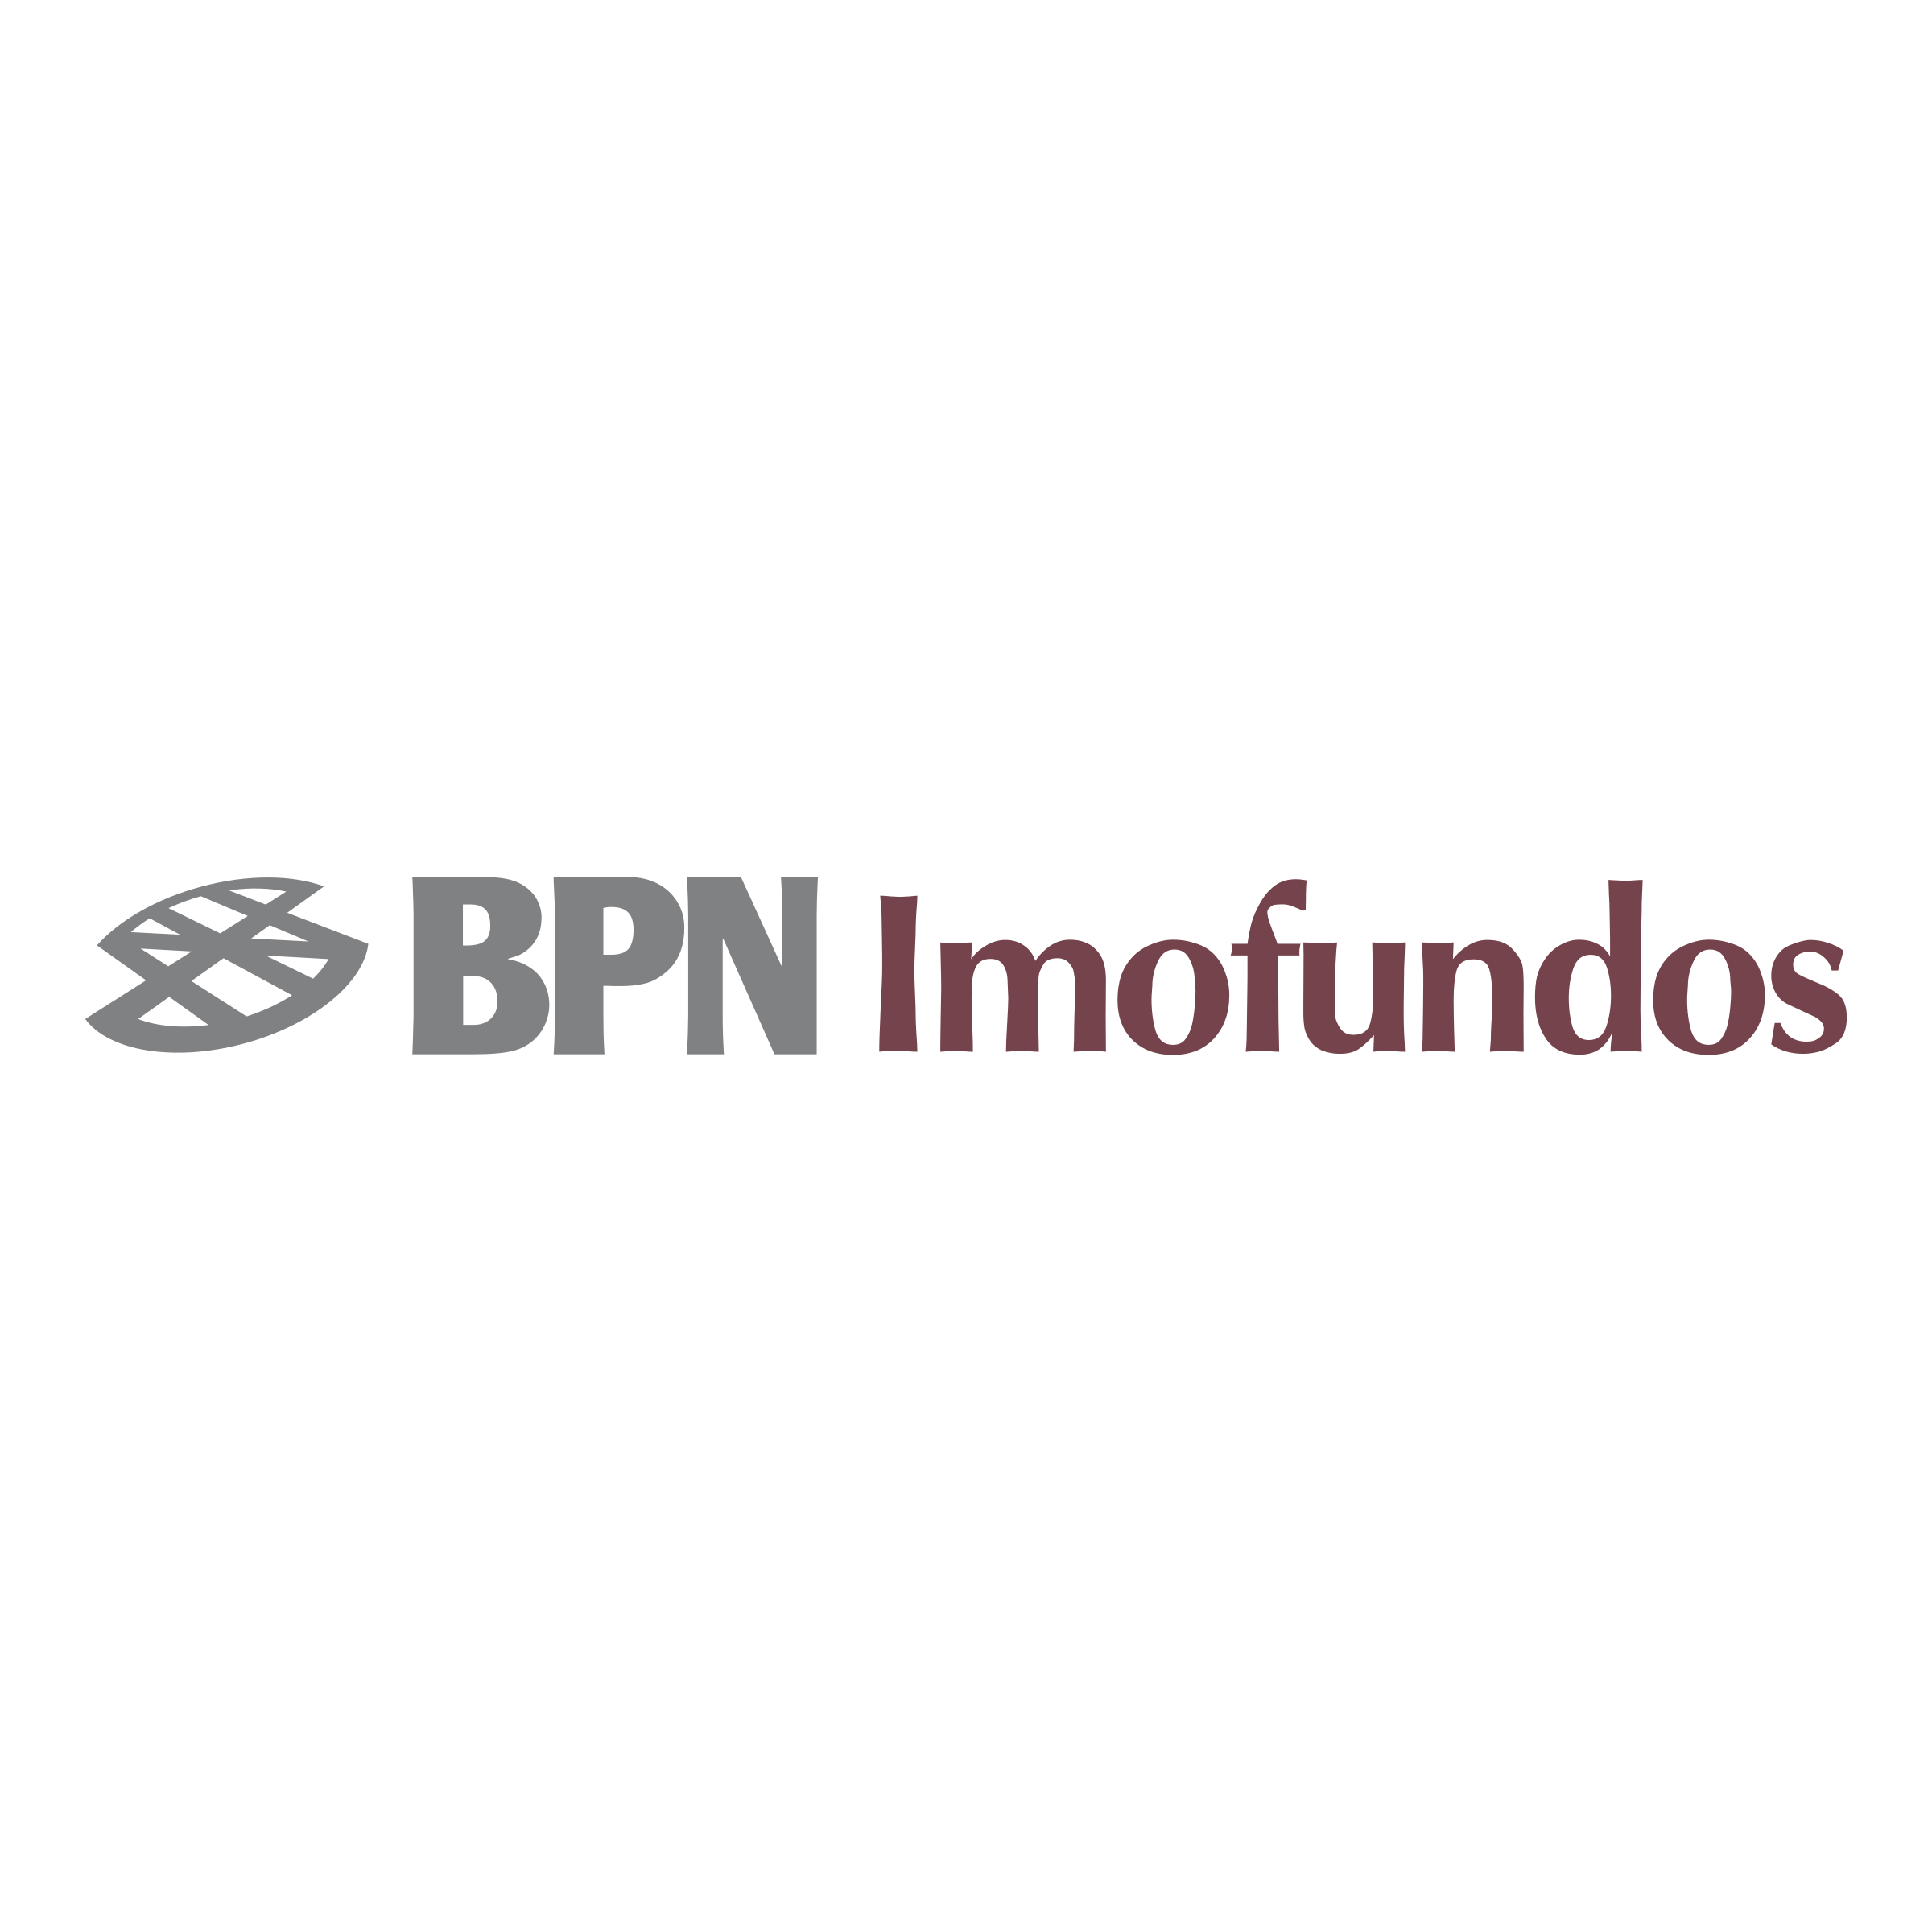 BPN Logo - BPN Imofundos Logo PNG Transparent & SVG Vector - Freebie Supply